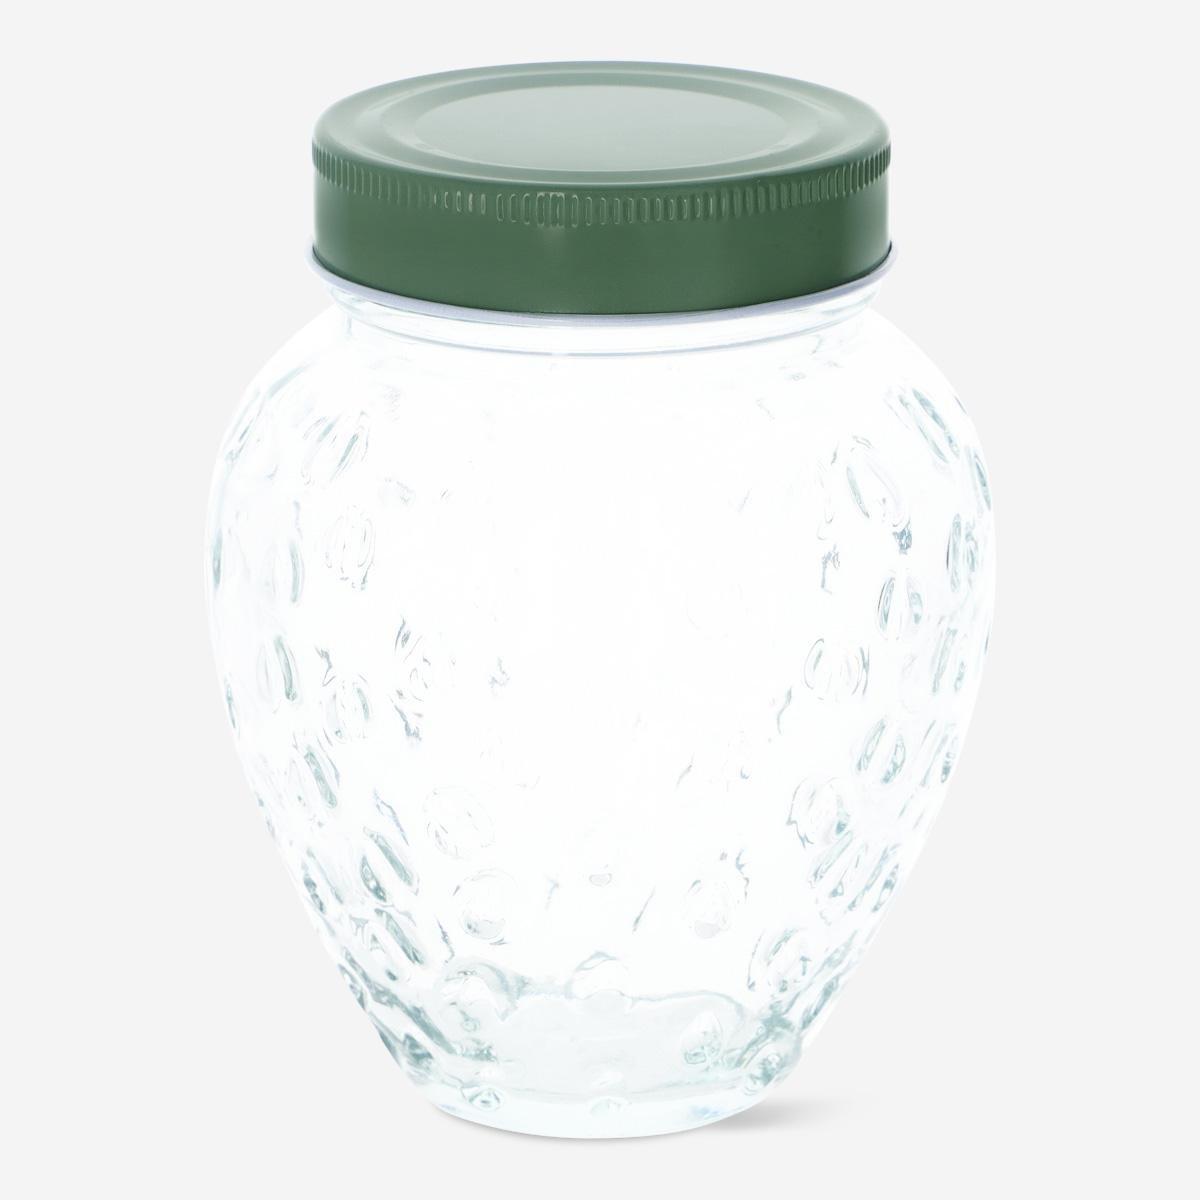 Green glass jar. 500 ml